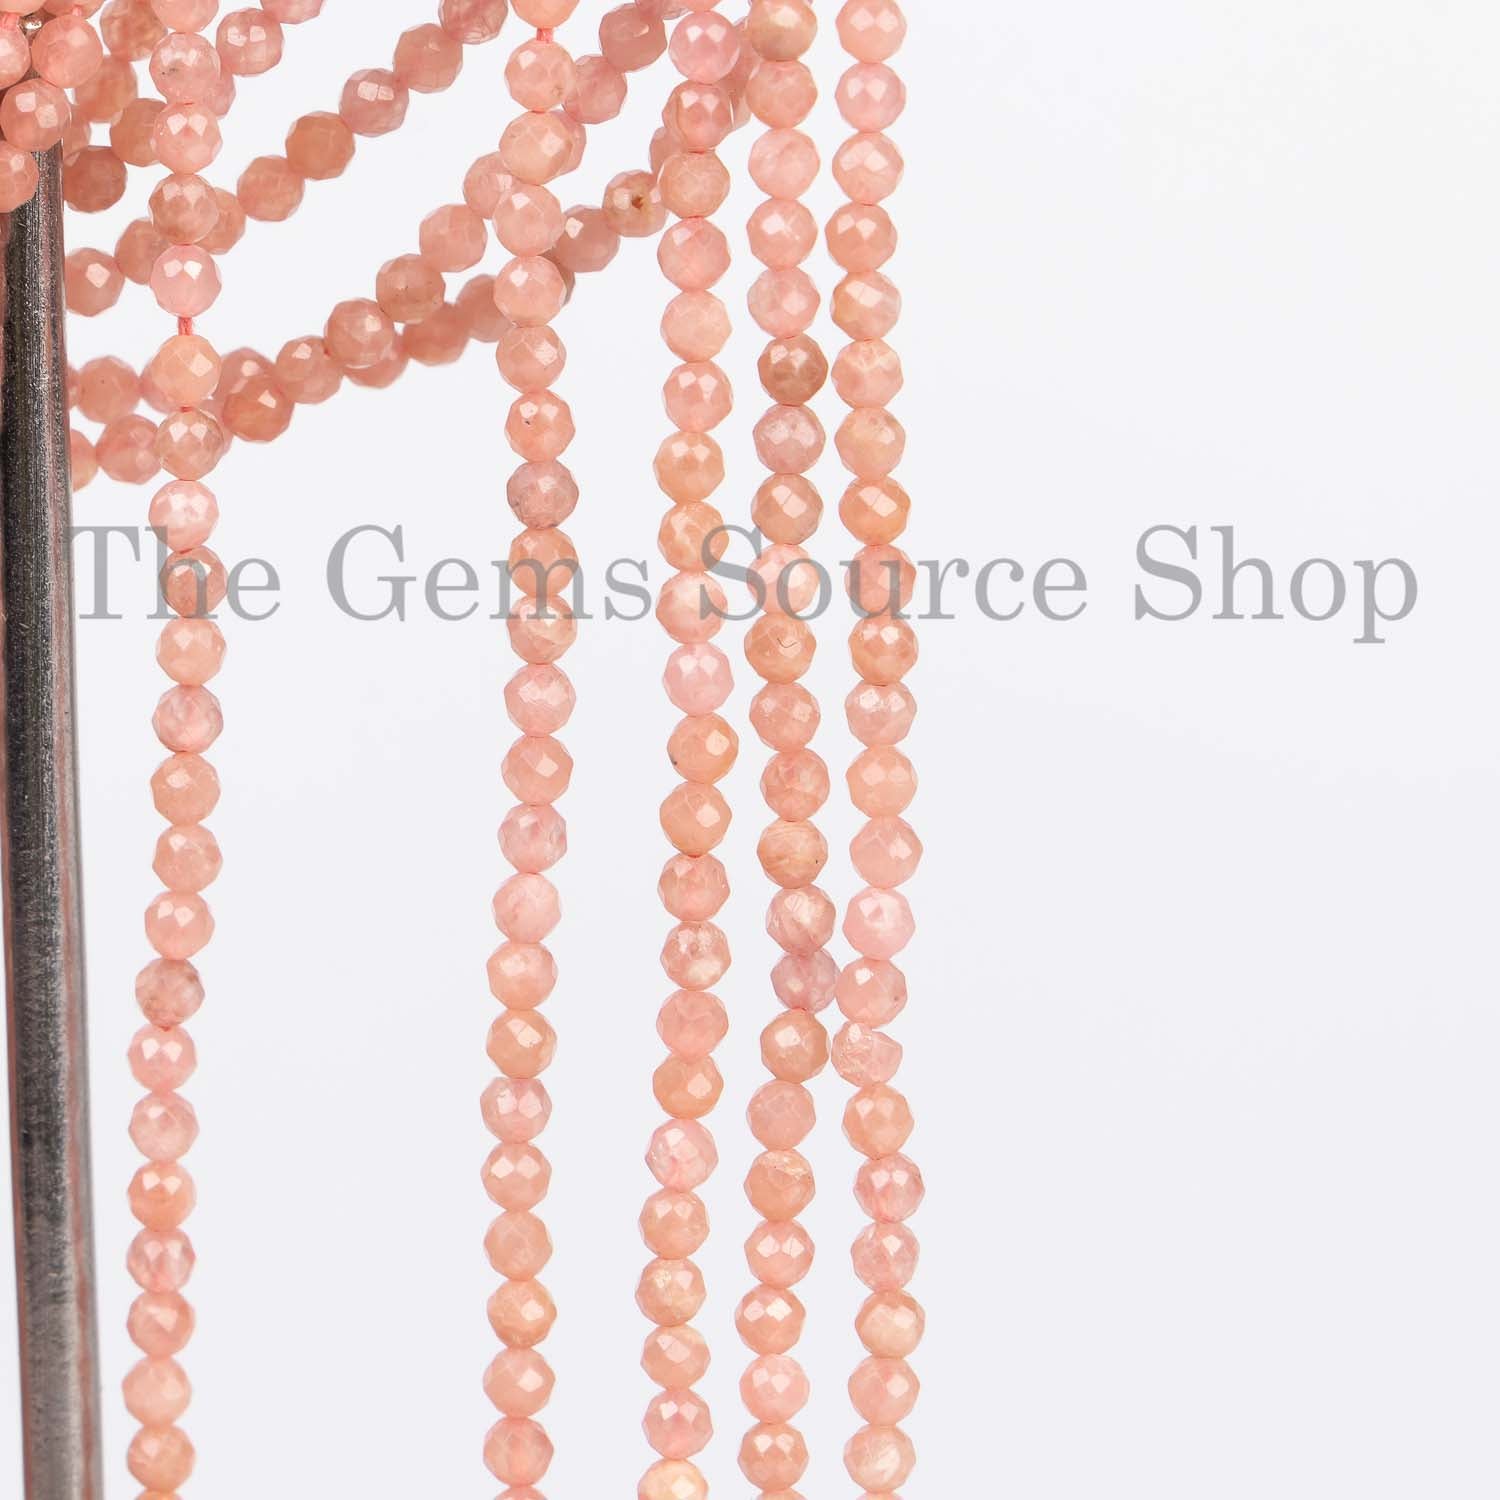 Rhodochrosite Faceted Beads, Rhodochrosite Rondelle Beads, Machine Cut Beads, Wholesale Gemstone Beads